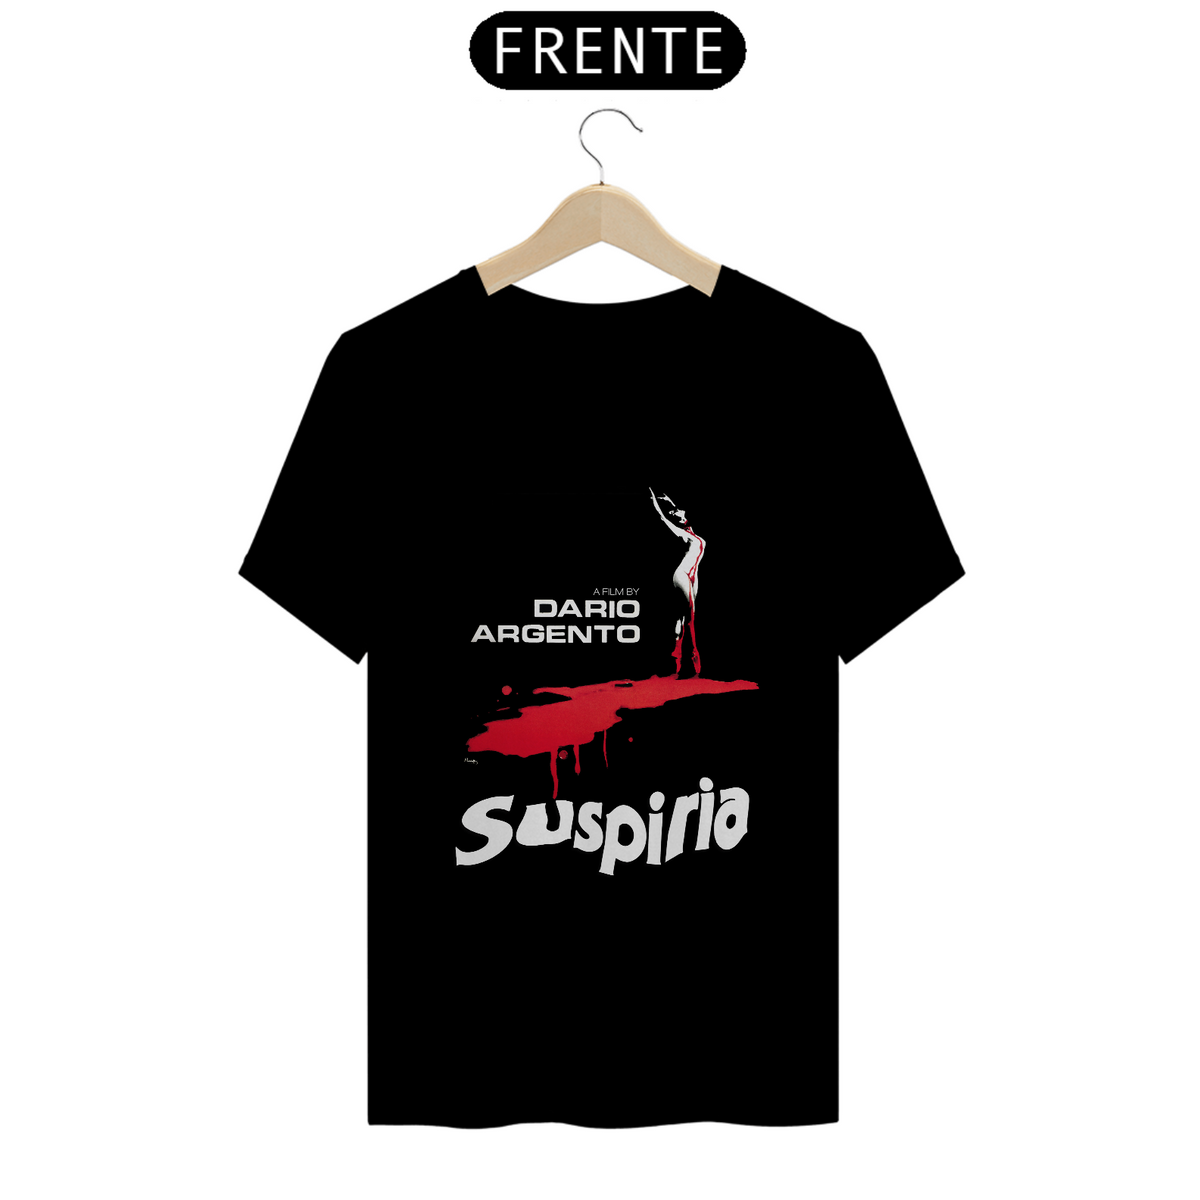 Nome do produto: Camiseta Suspiria - Dario Argento (1977)